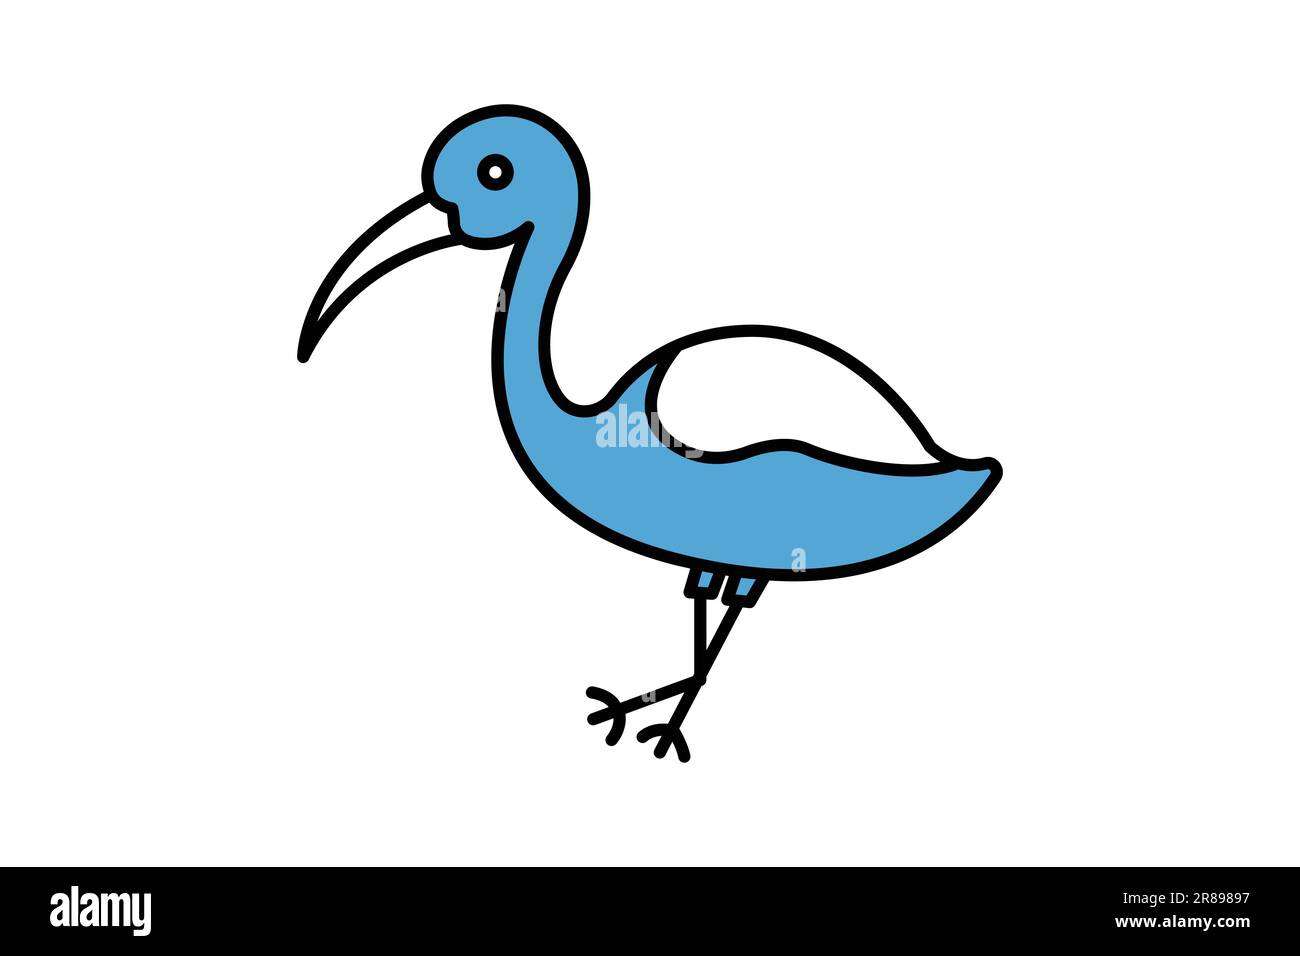 Stork bird icon. Two tone icon style design. Simple vector design editable Stock Vector